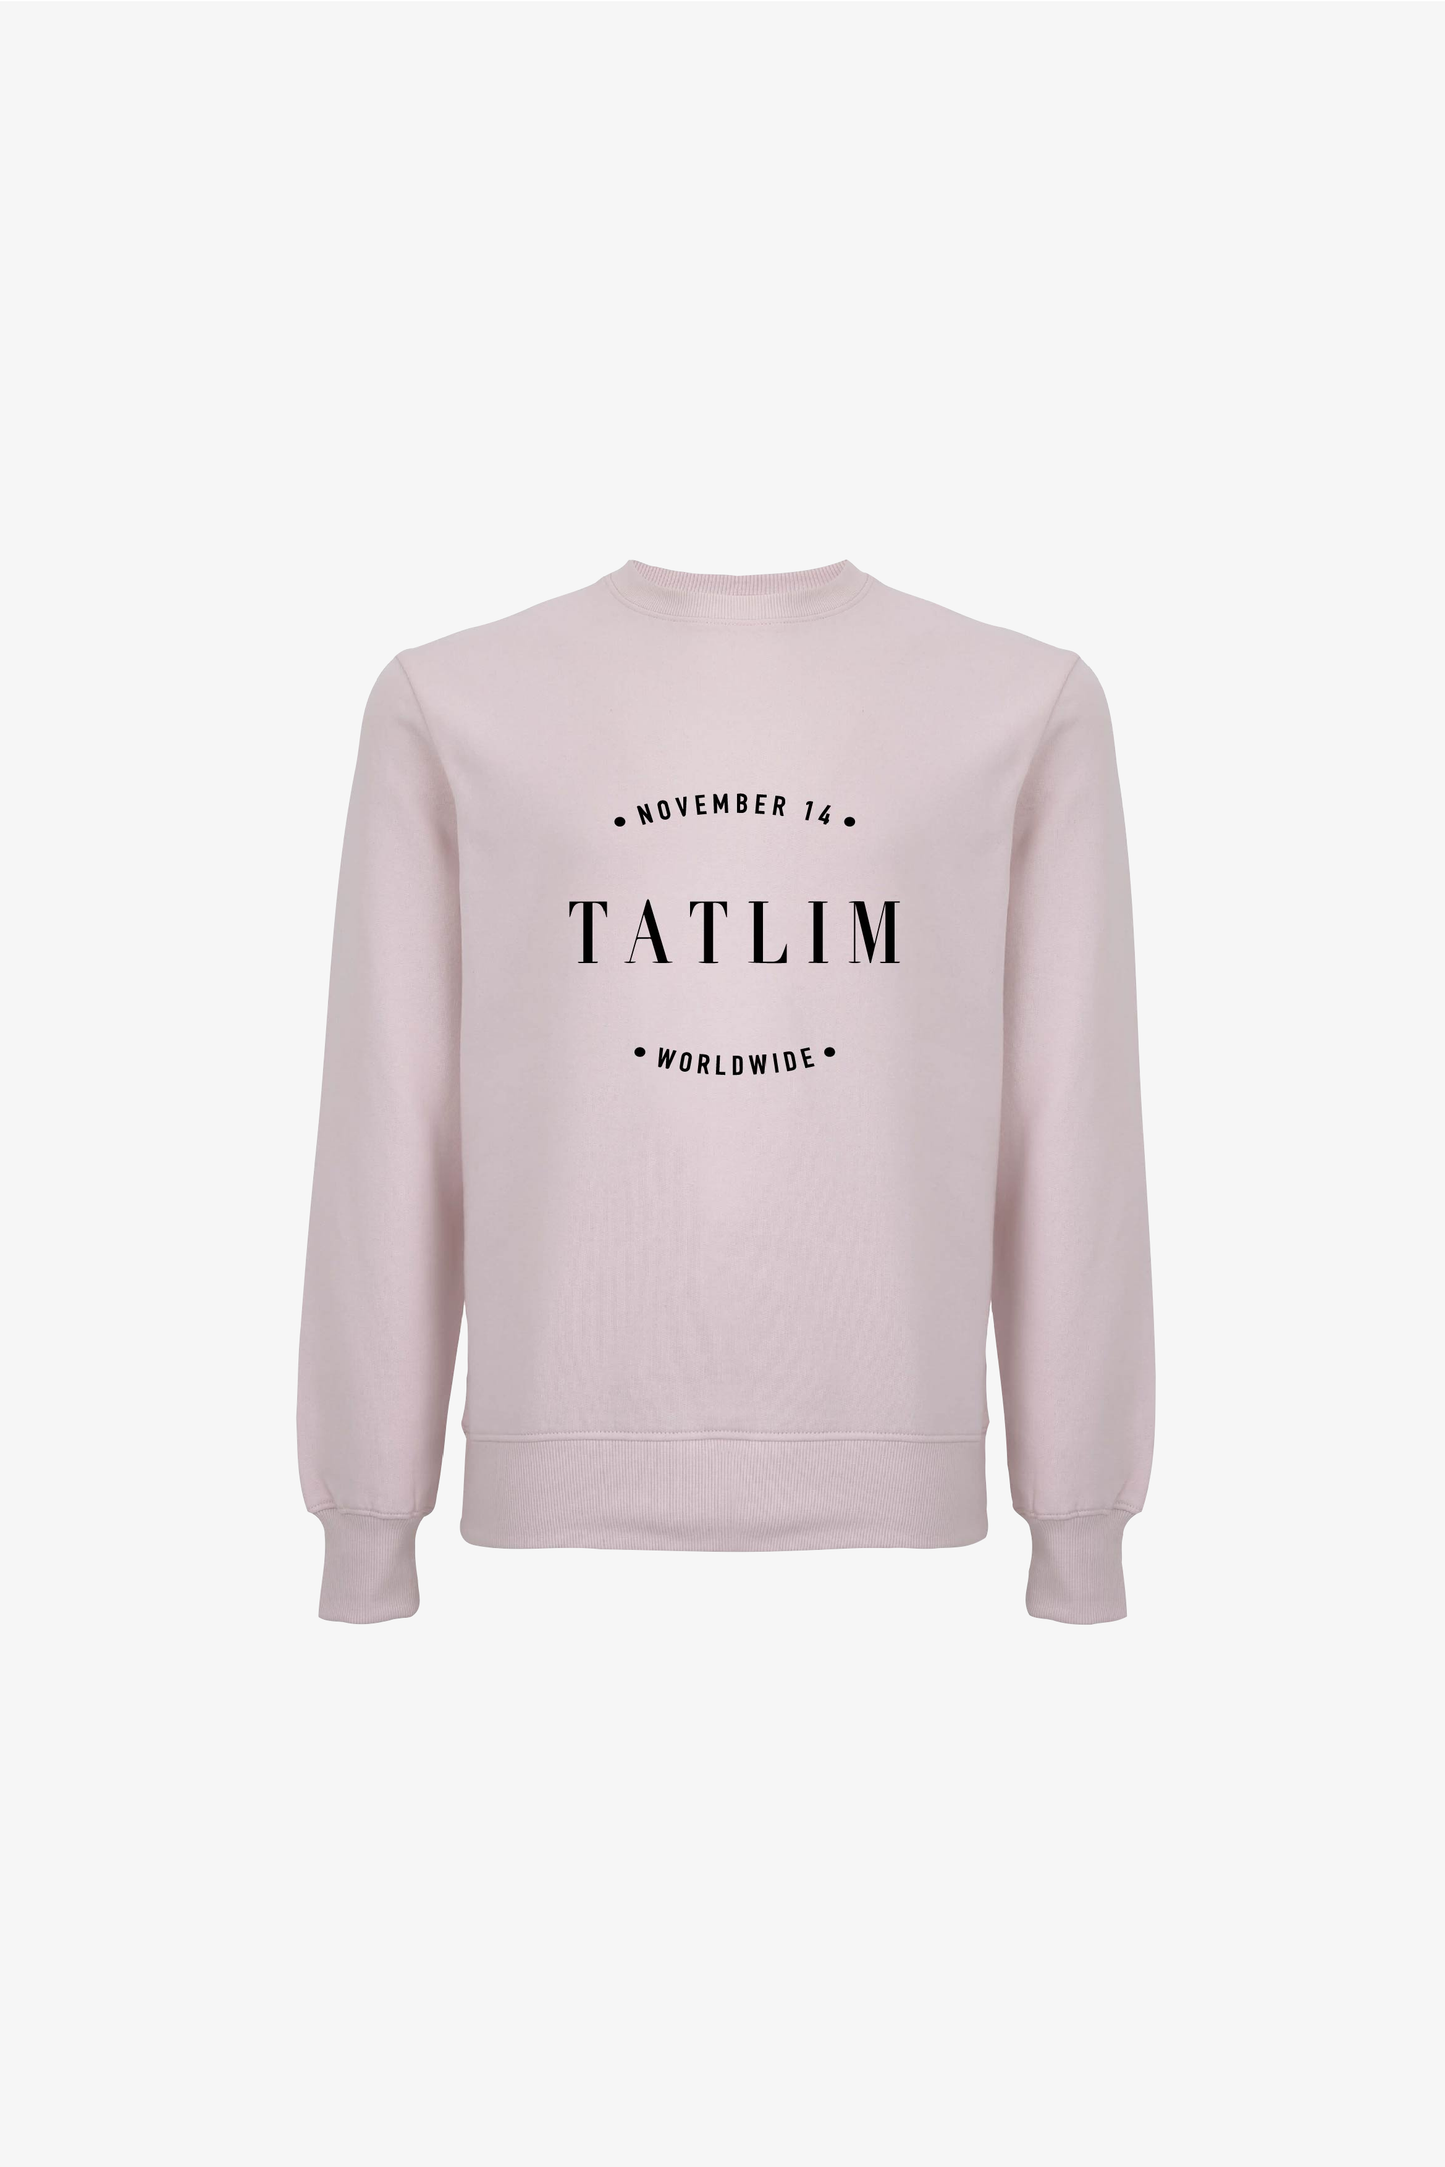 Faded Pink Tatlim Light Sweatshirt